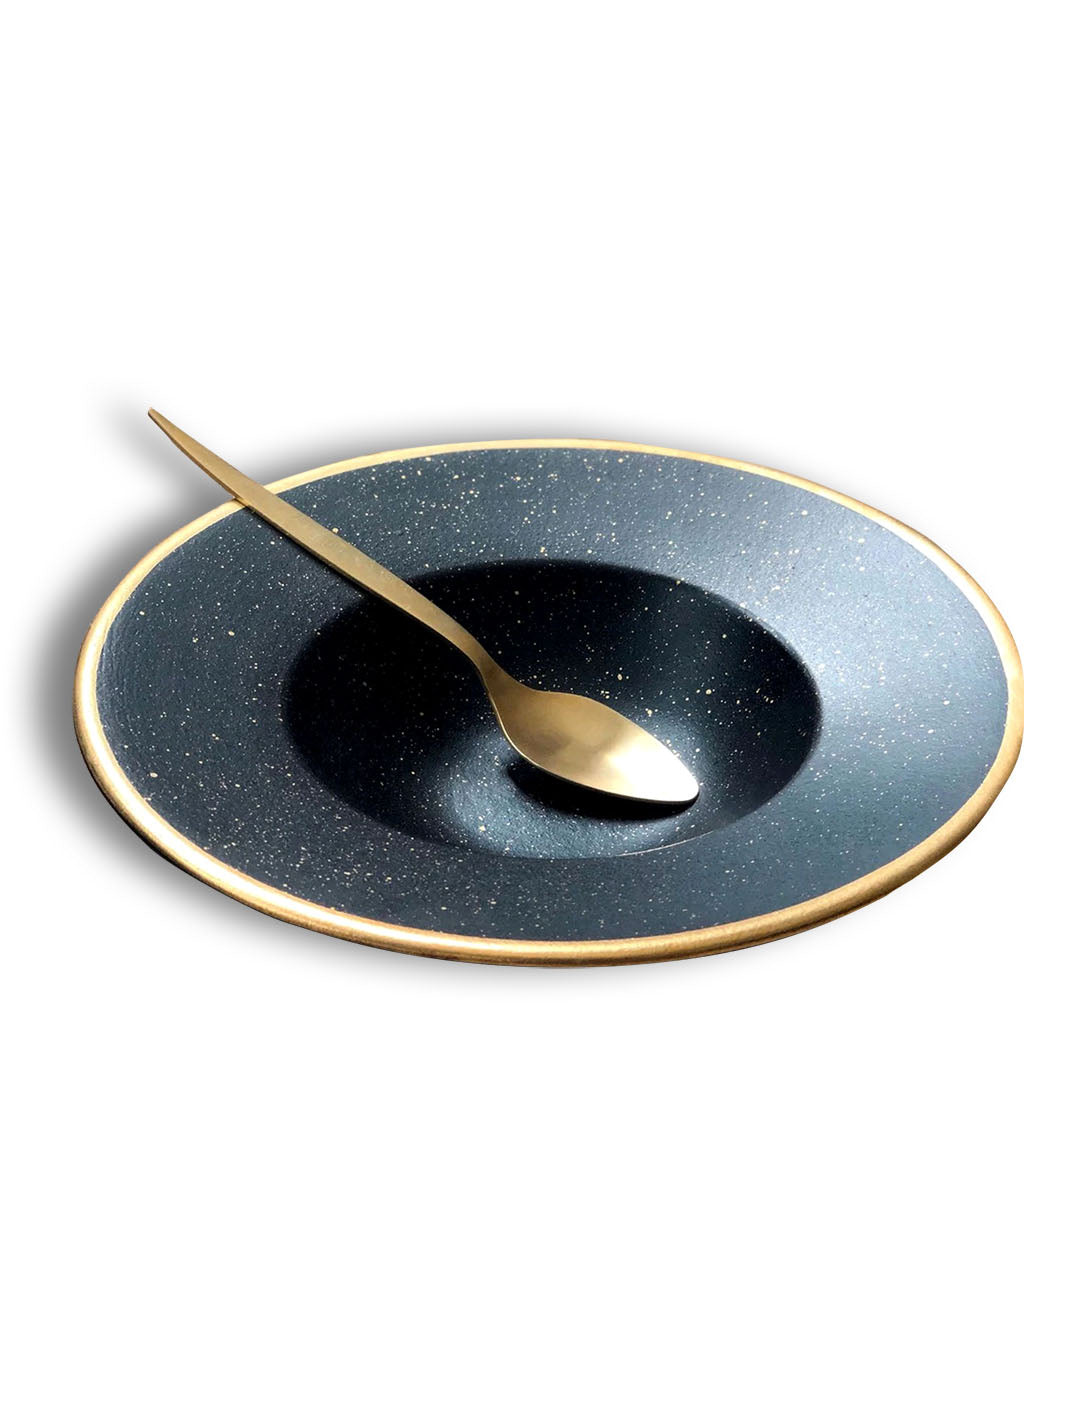 Elegant Handcrafted Ceramic Royal Stars Pasta Bowl/Plate Deco Plates DCB0020